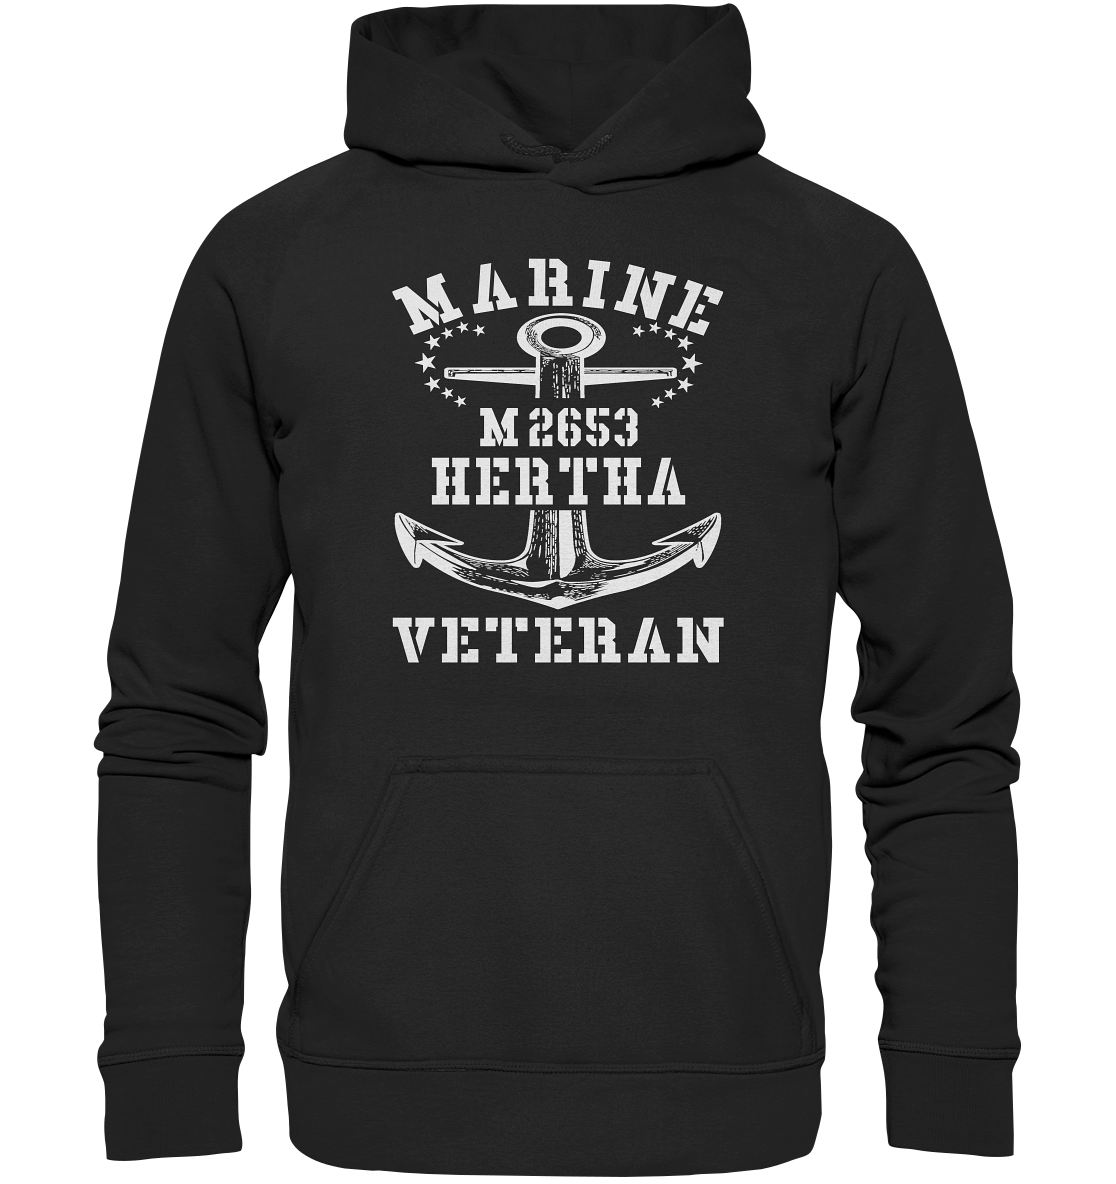 BiMi M2653 H.E.R.T.H.A. Marine Veteran - Basic Unisex Hoodie